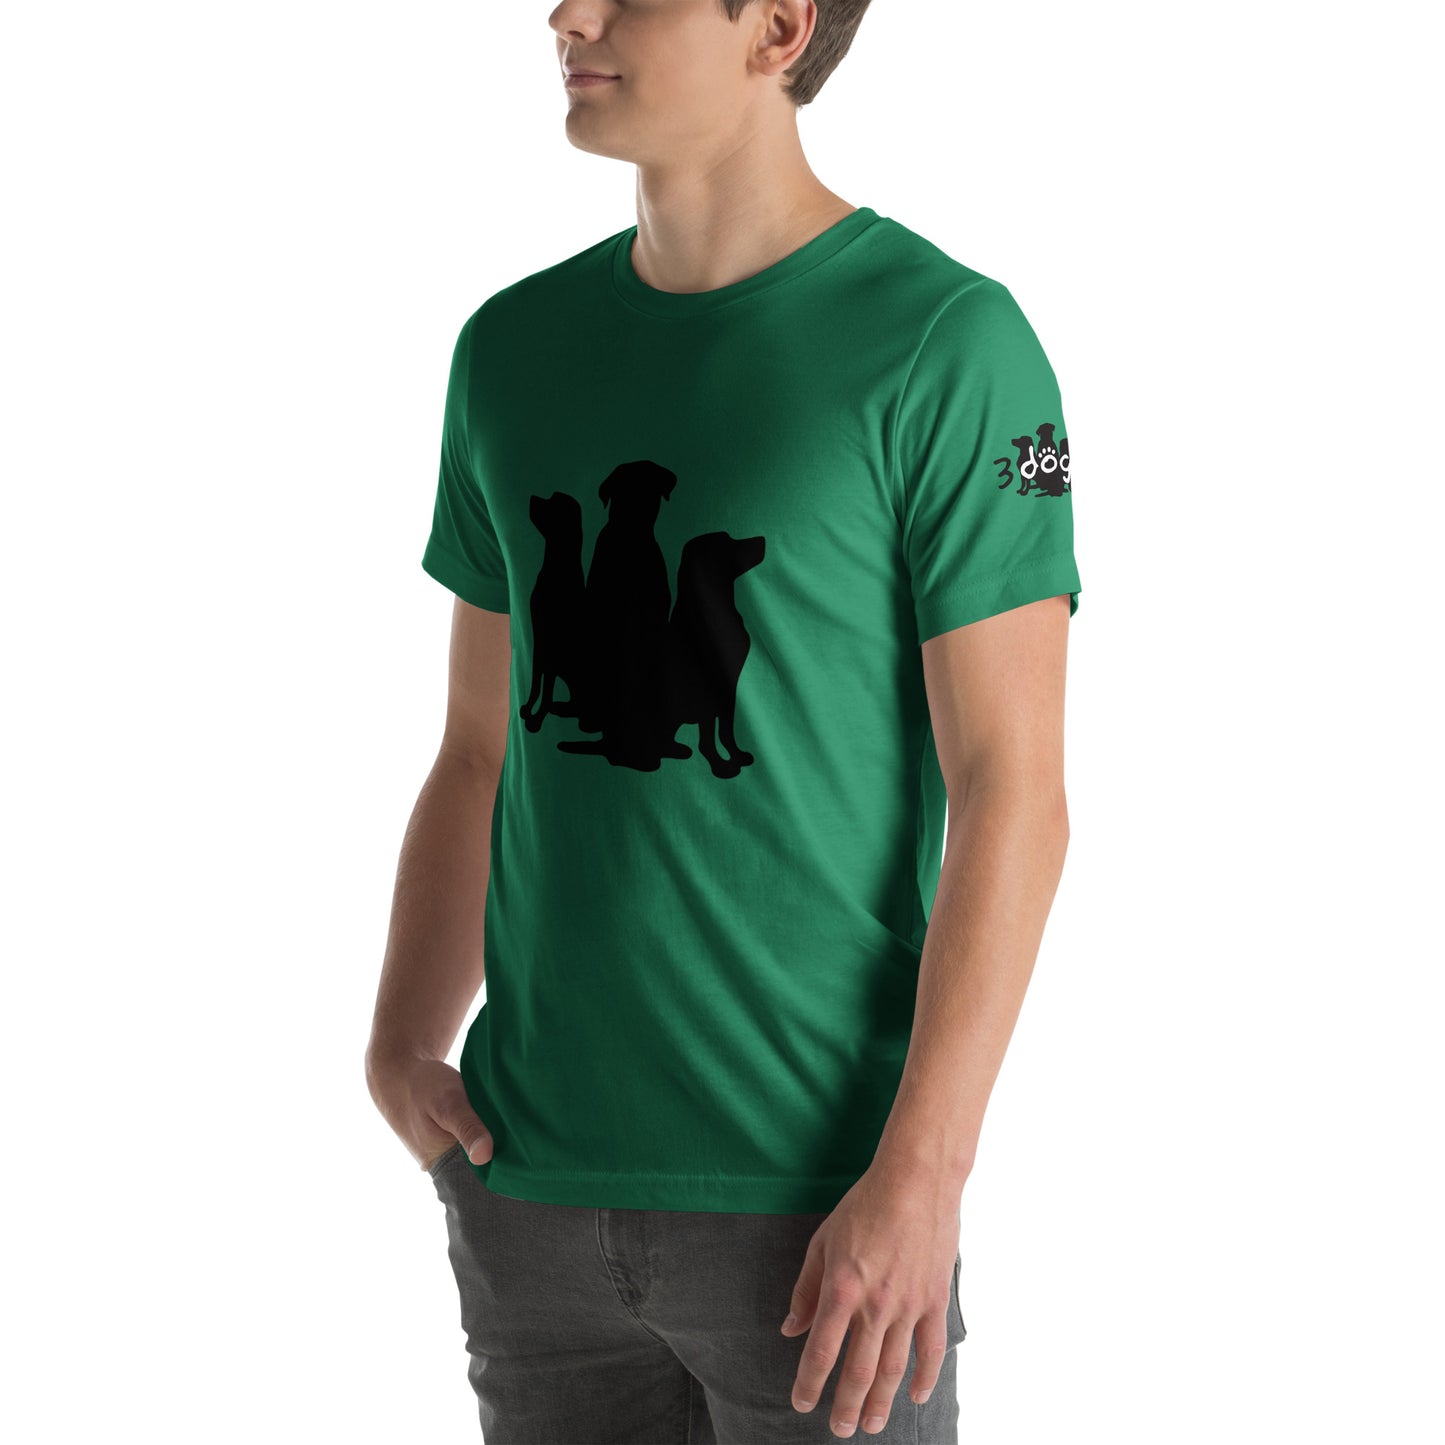 Unisex T-Shirt 3 Dogs with Full Logo Black